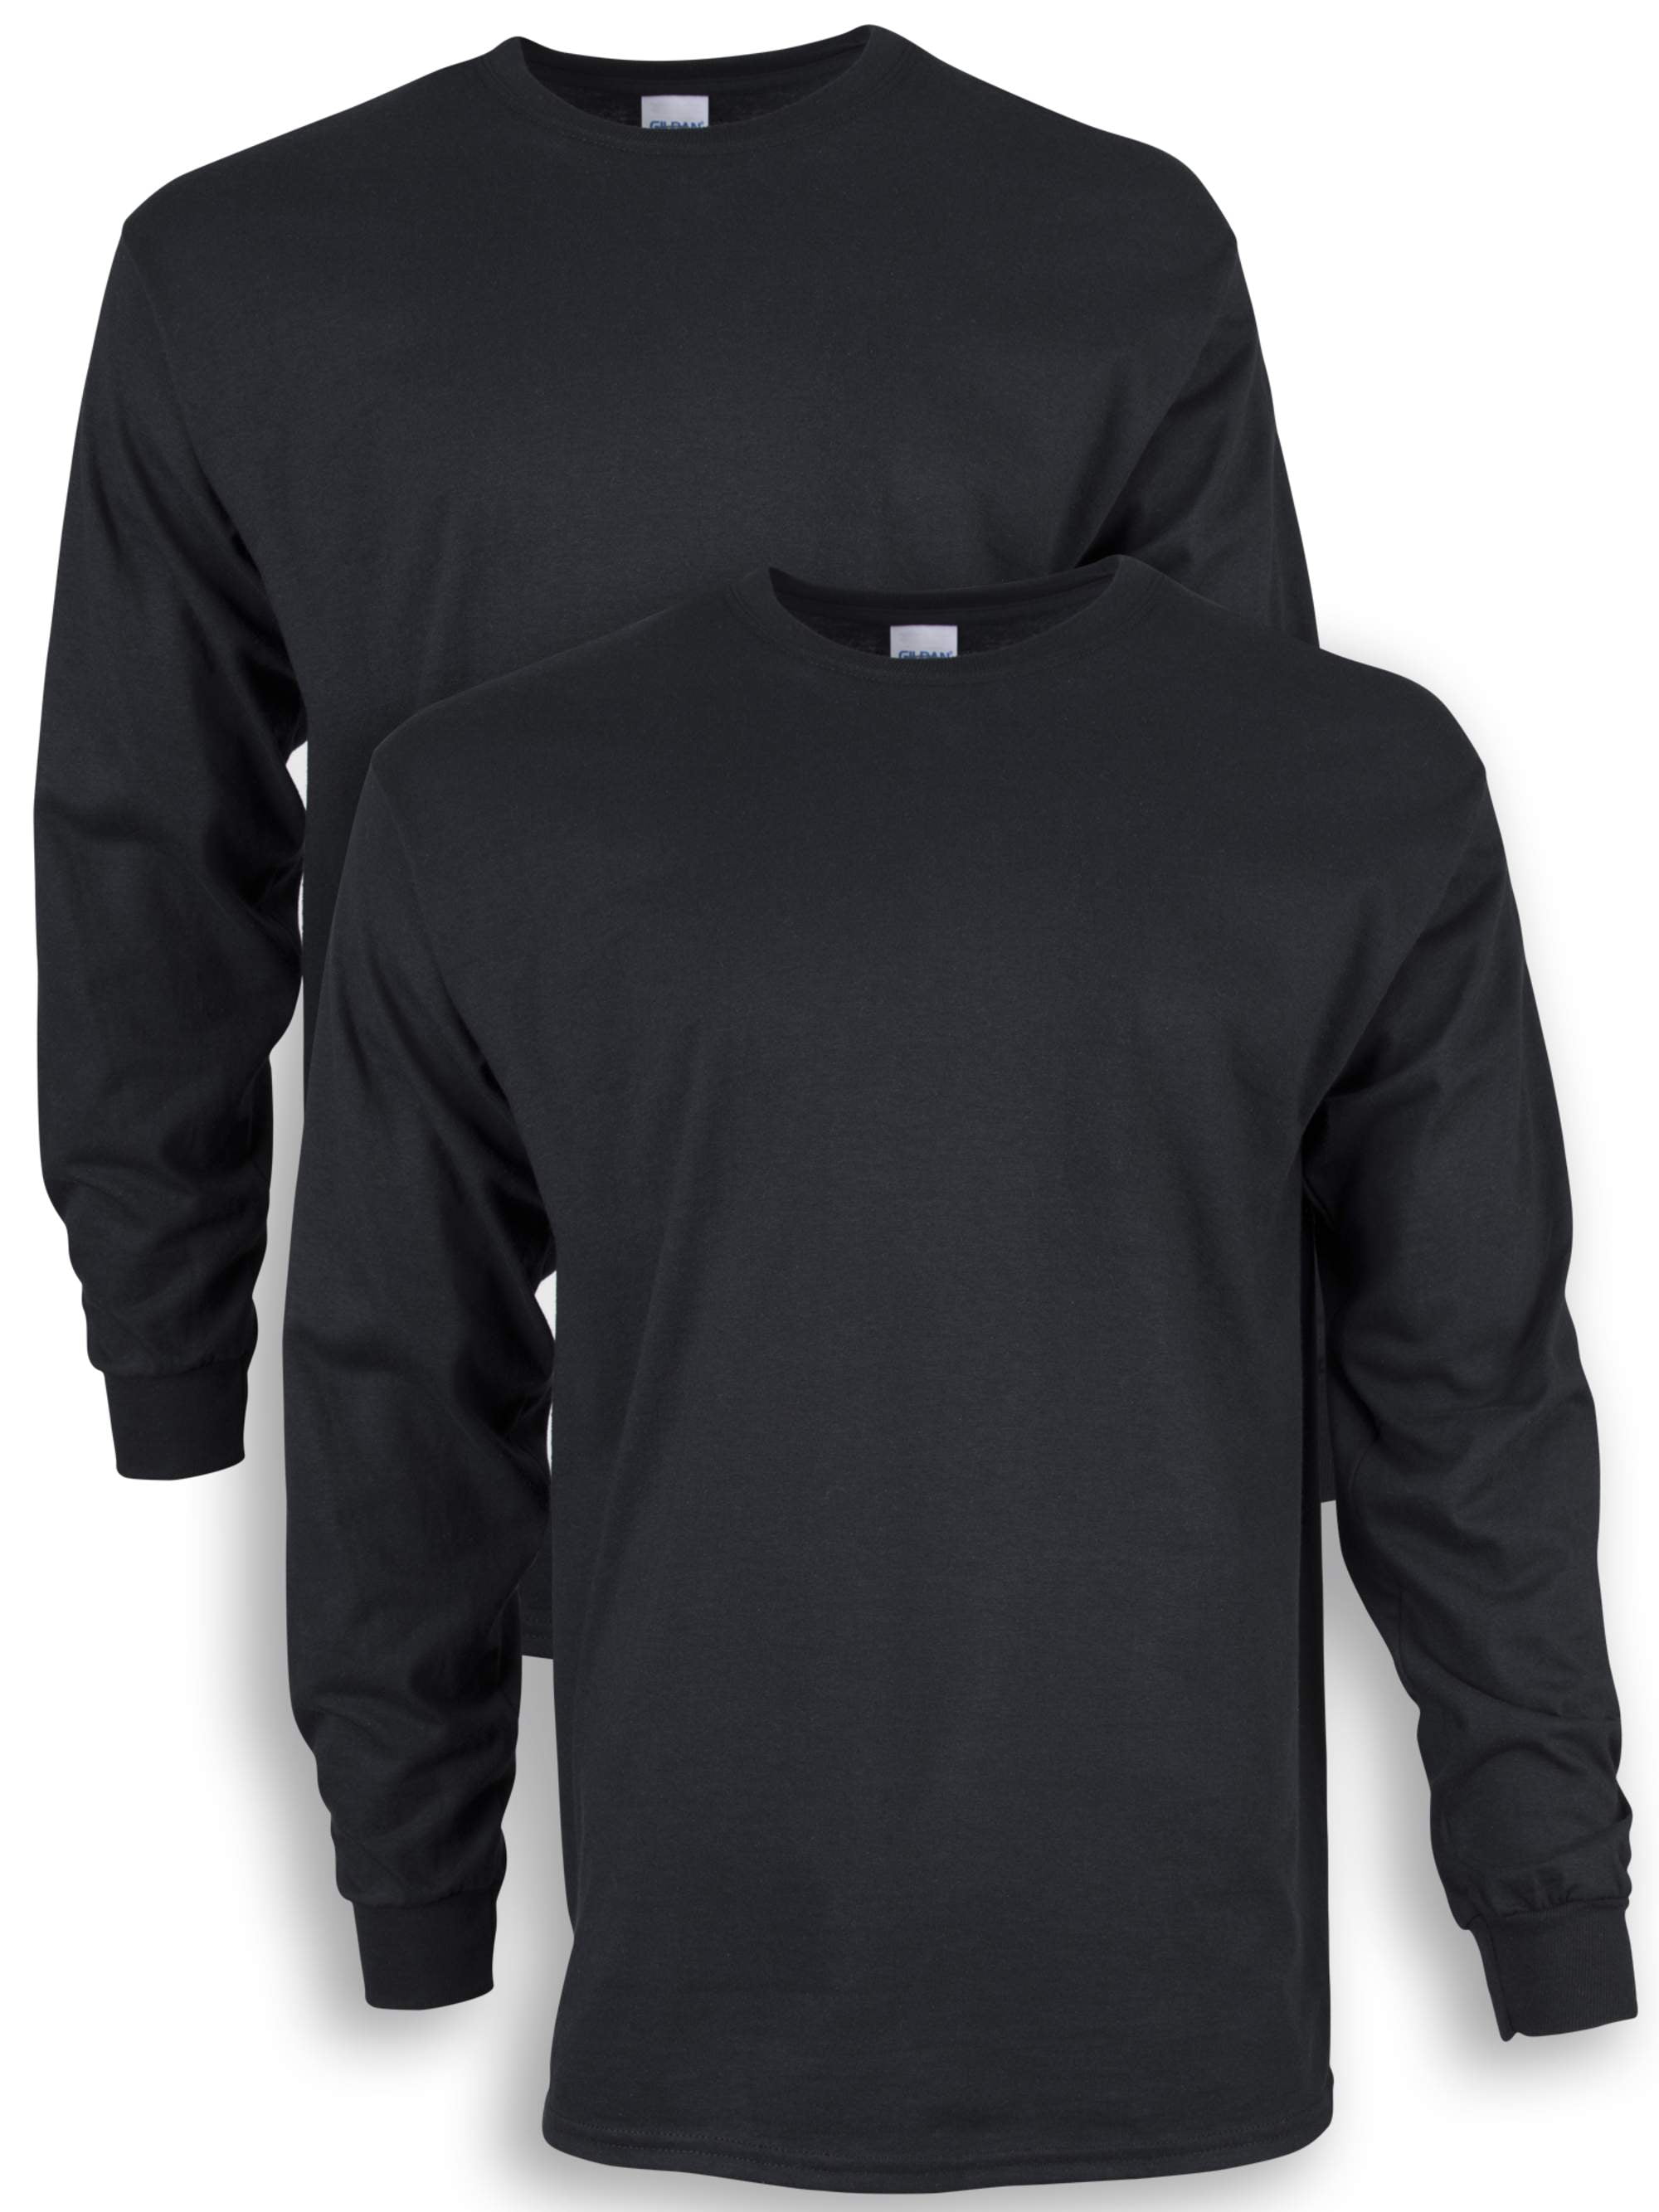 10 Blank Gildan Ultra Cotton Long Sleeve T-Shirt Lot ok to mix 2XL-5XL & Colors